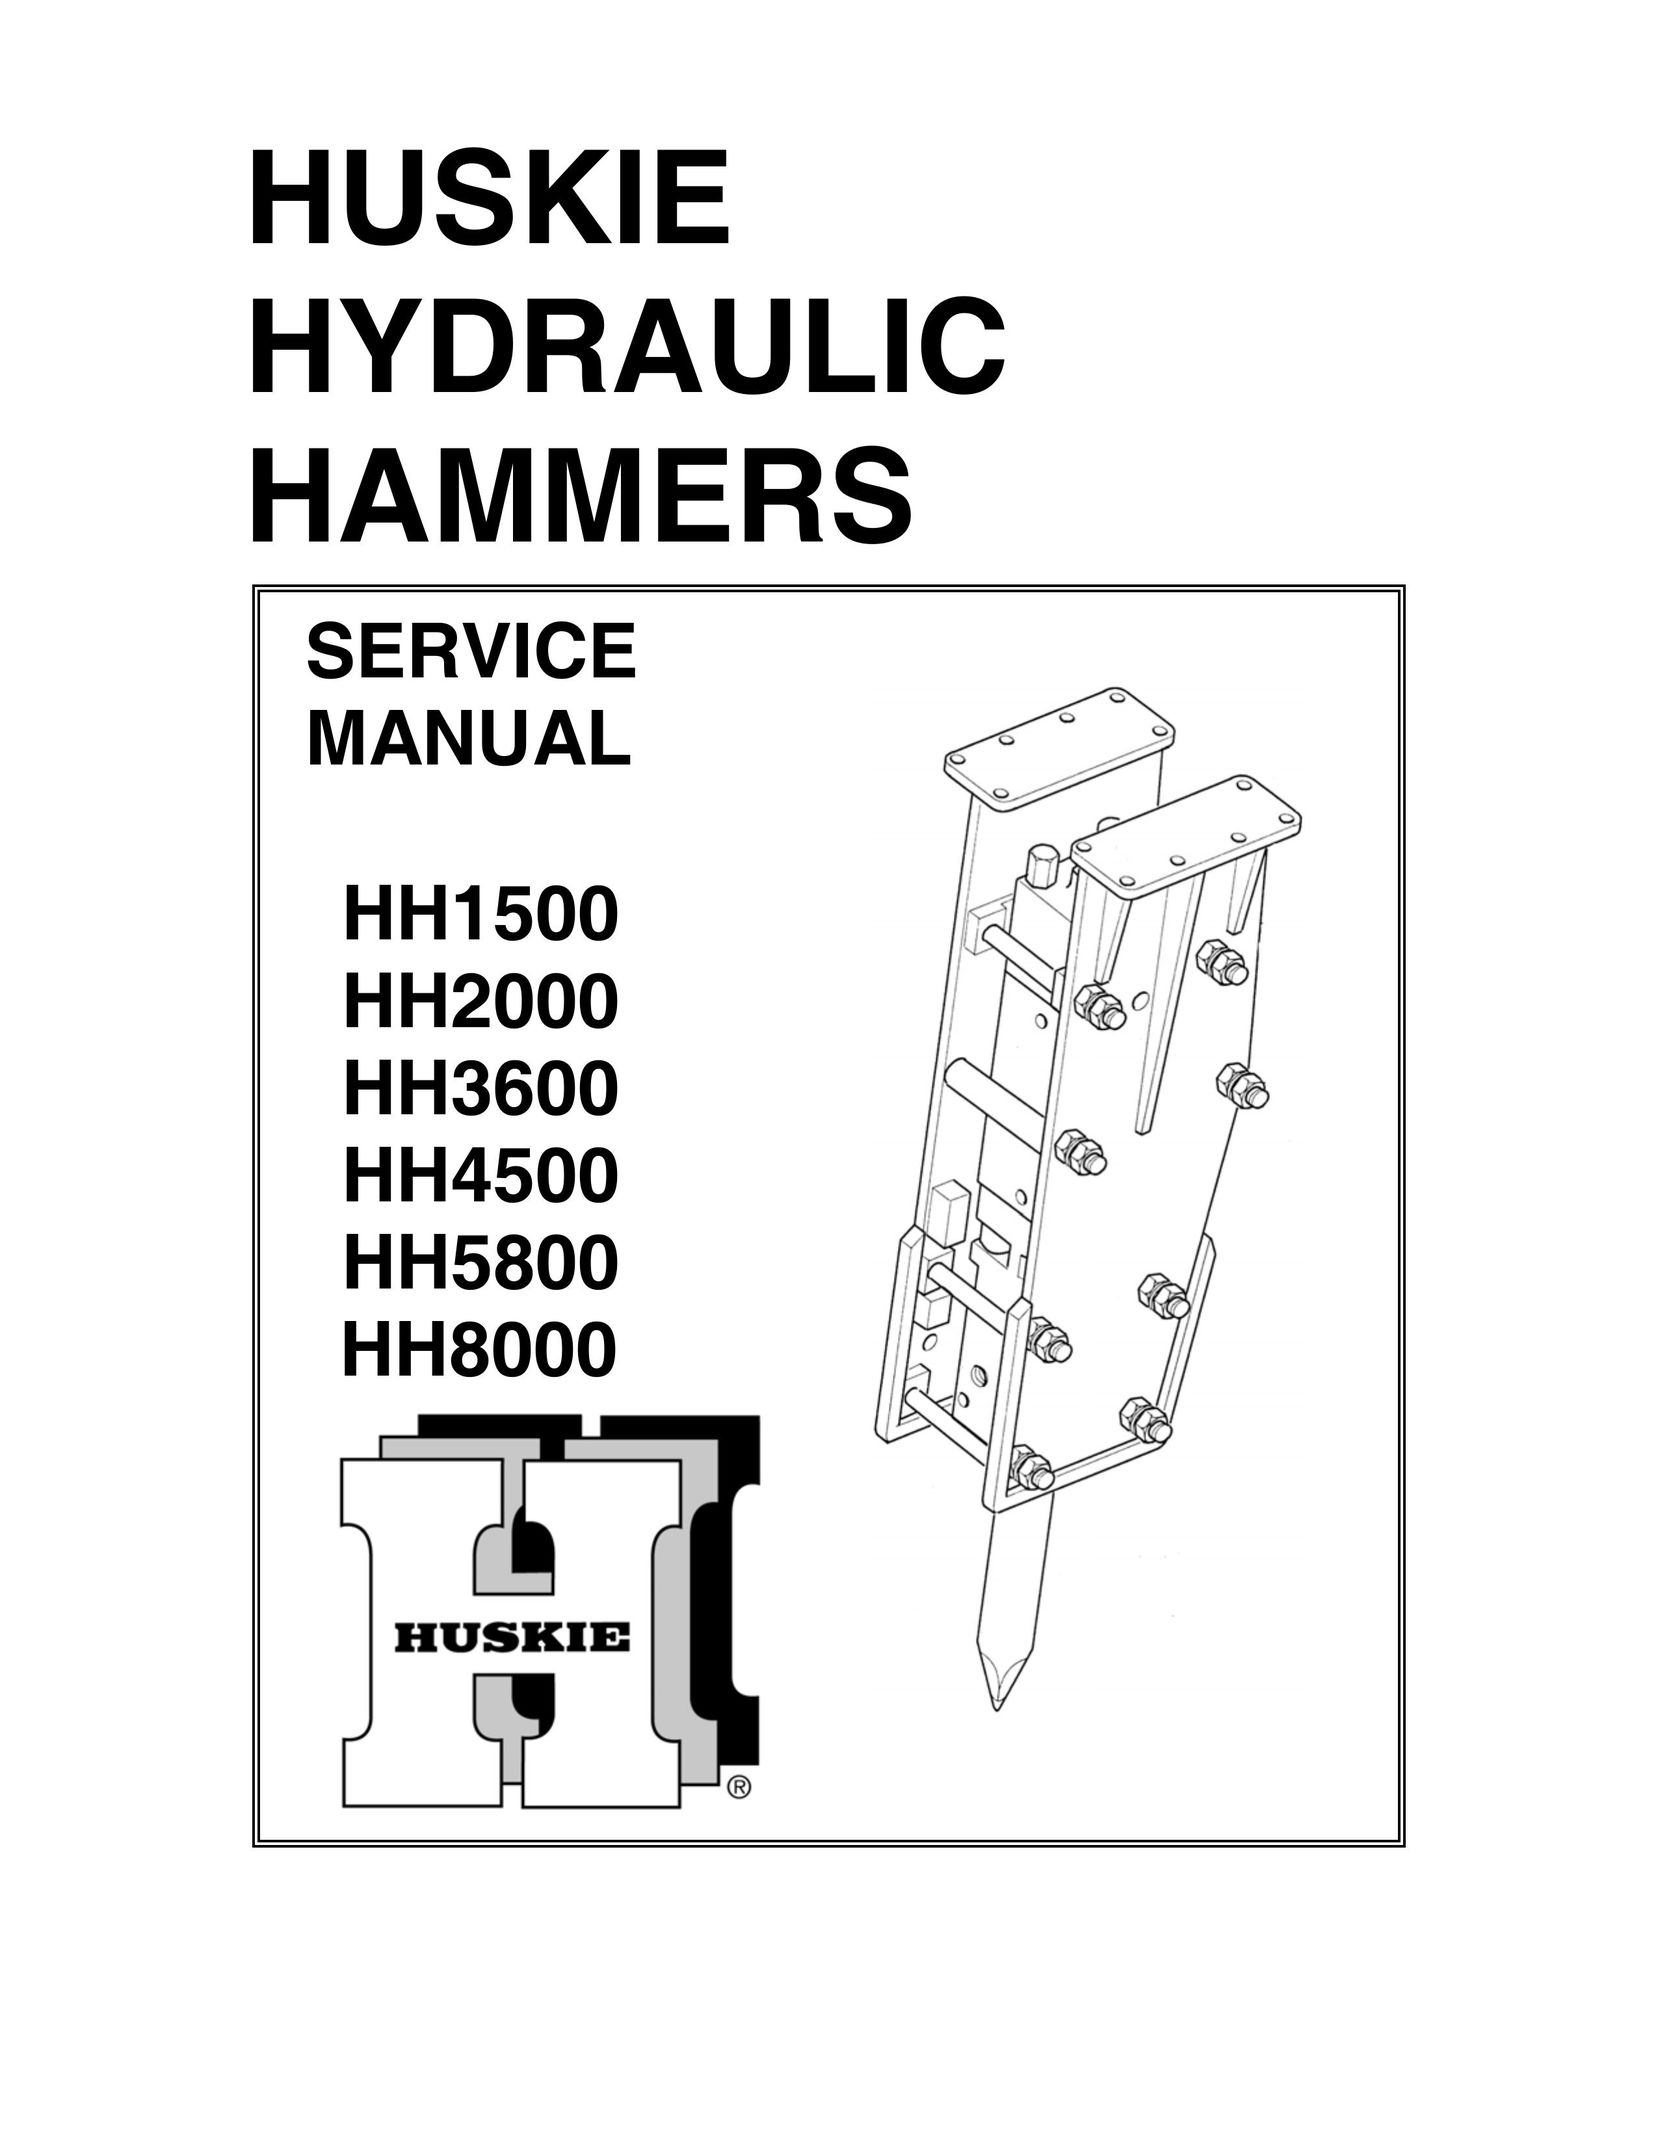 Huskee HH5800 Cordless Drill User Manual